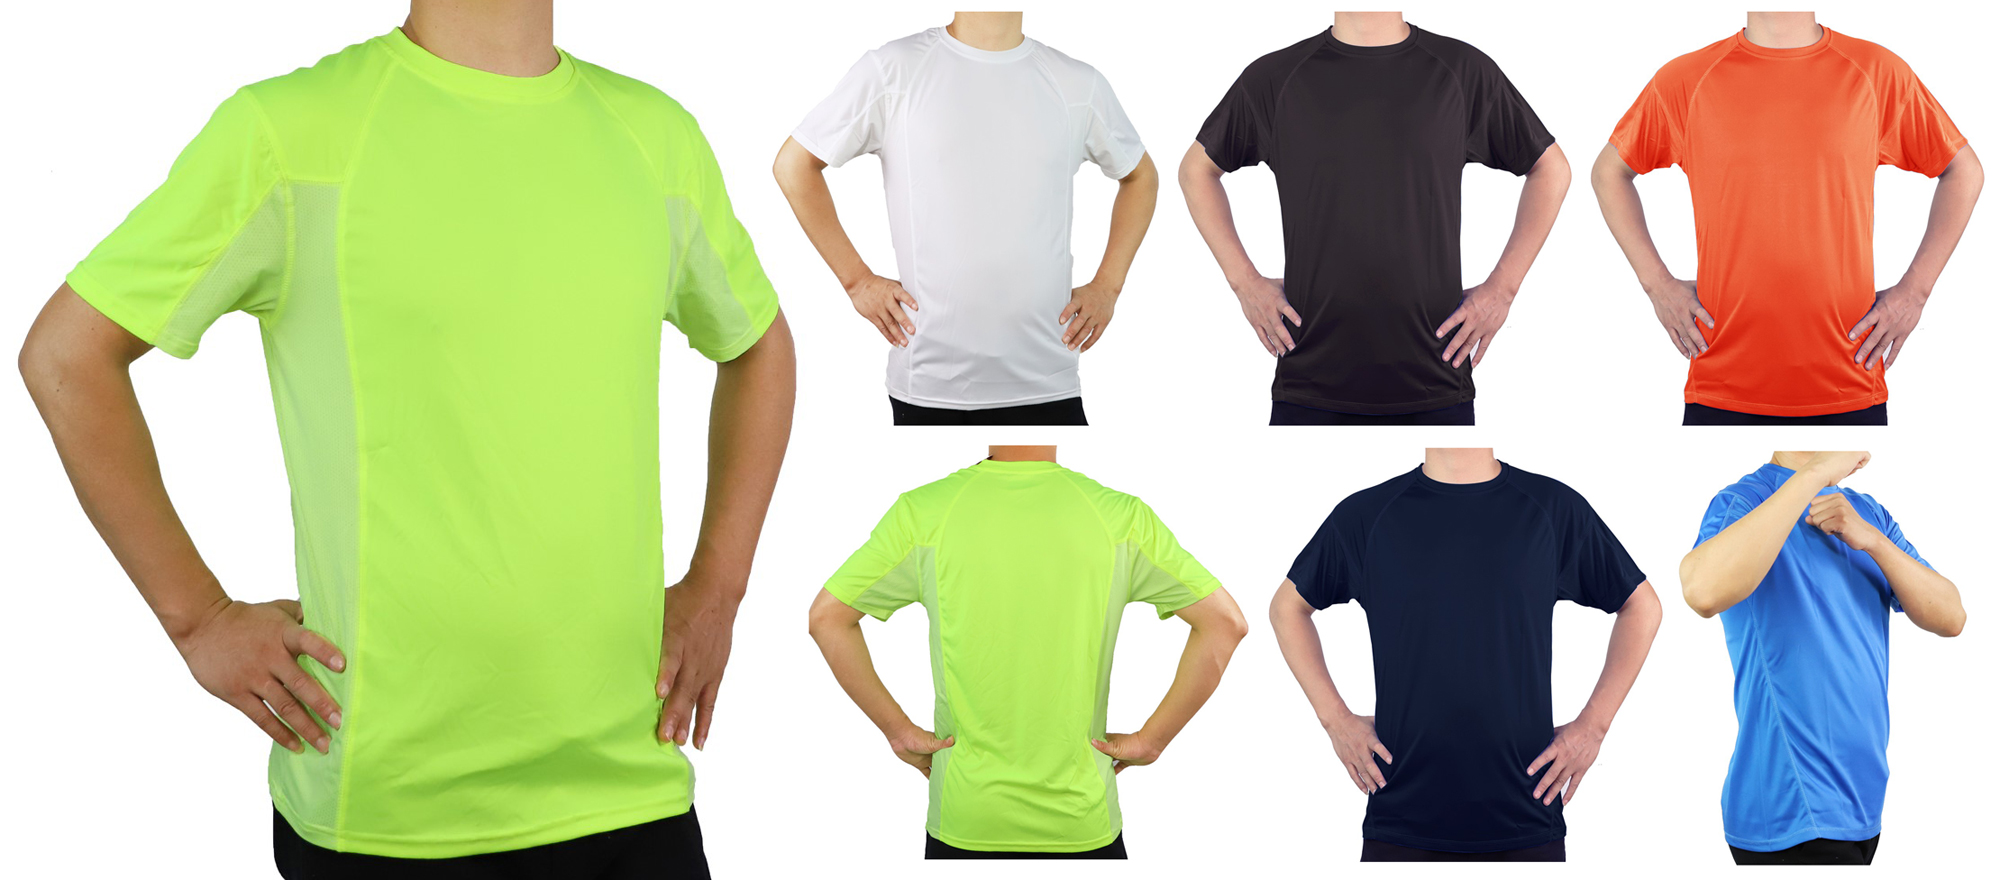 Men's Crew Performance Sport T-SHIRTs - Choose Your Color(s)